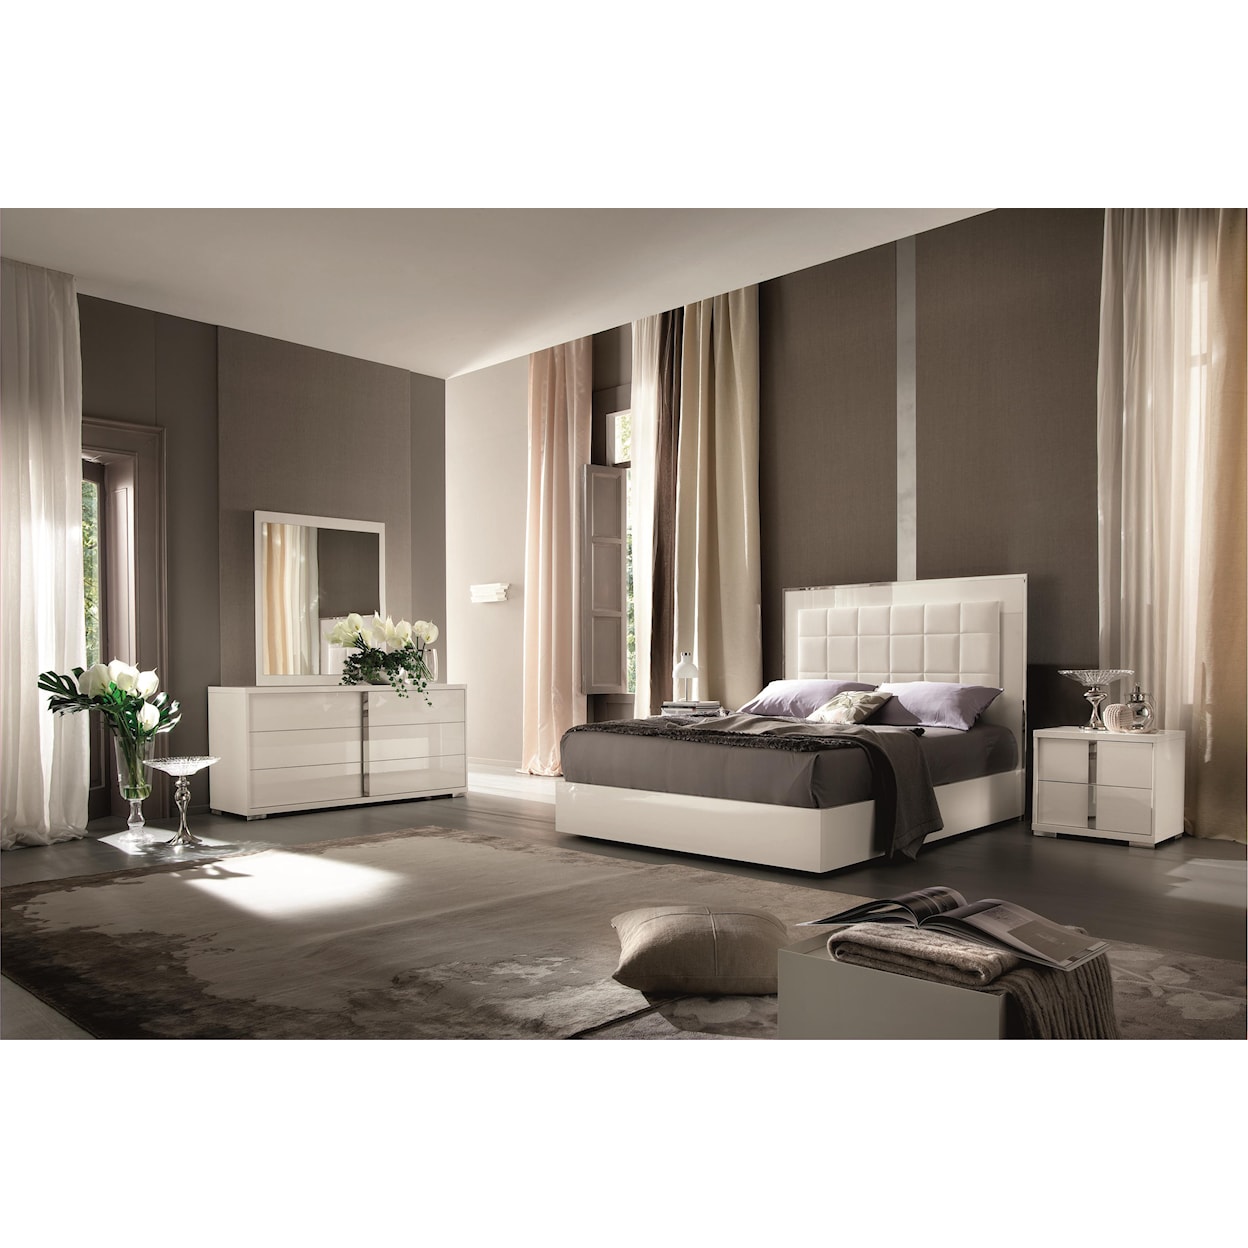 Alf Italia Imperia California King Bedroom Group